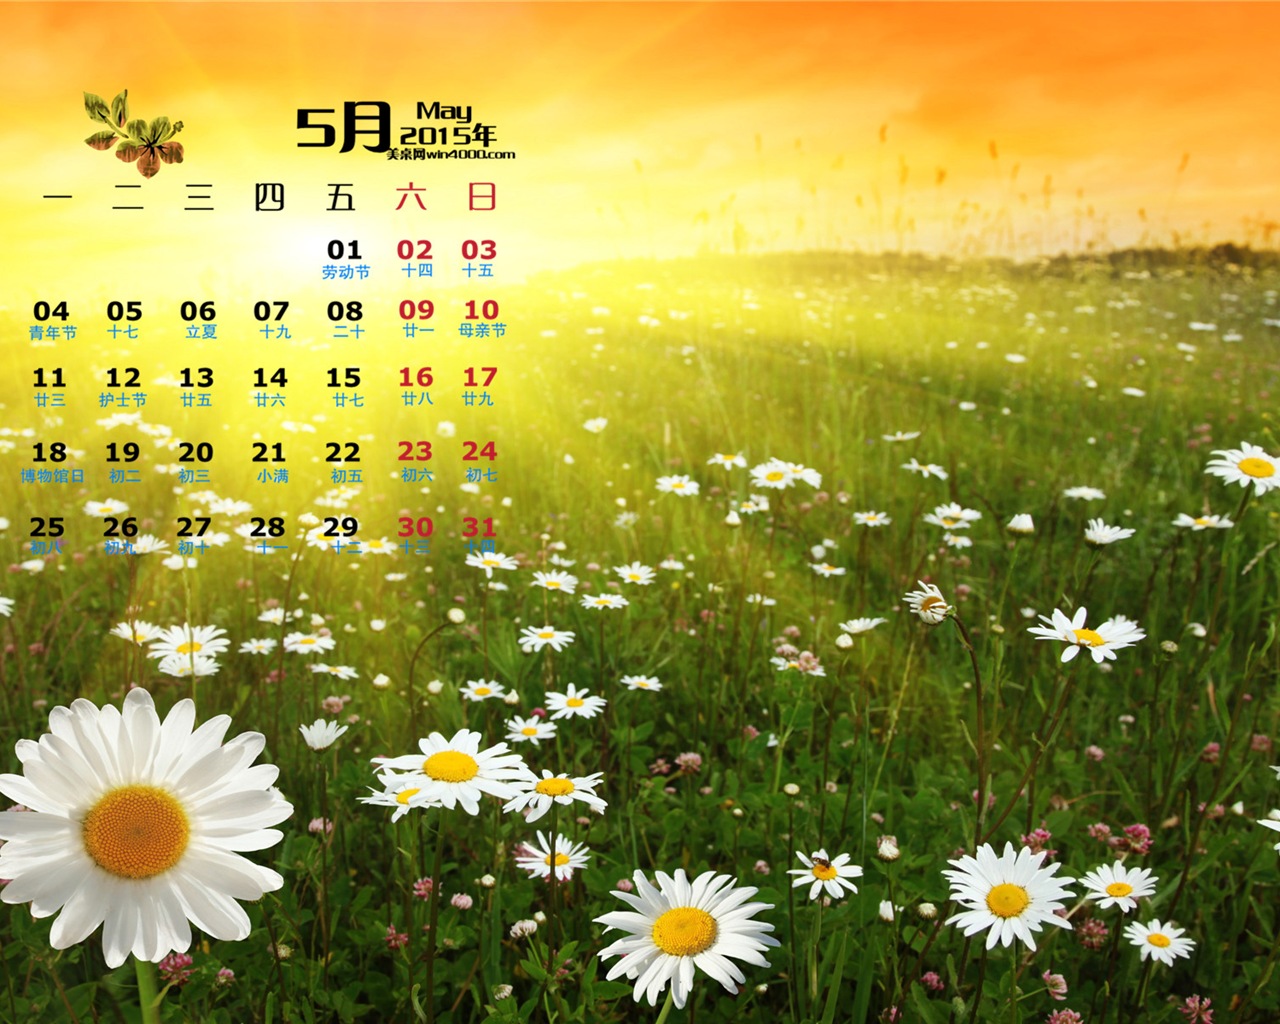 Mai 2015 calendar fond d'écran (1) #15 - 1280x1024